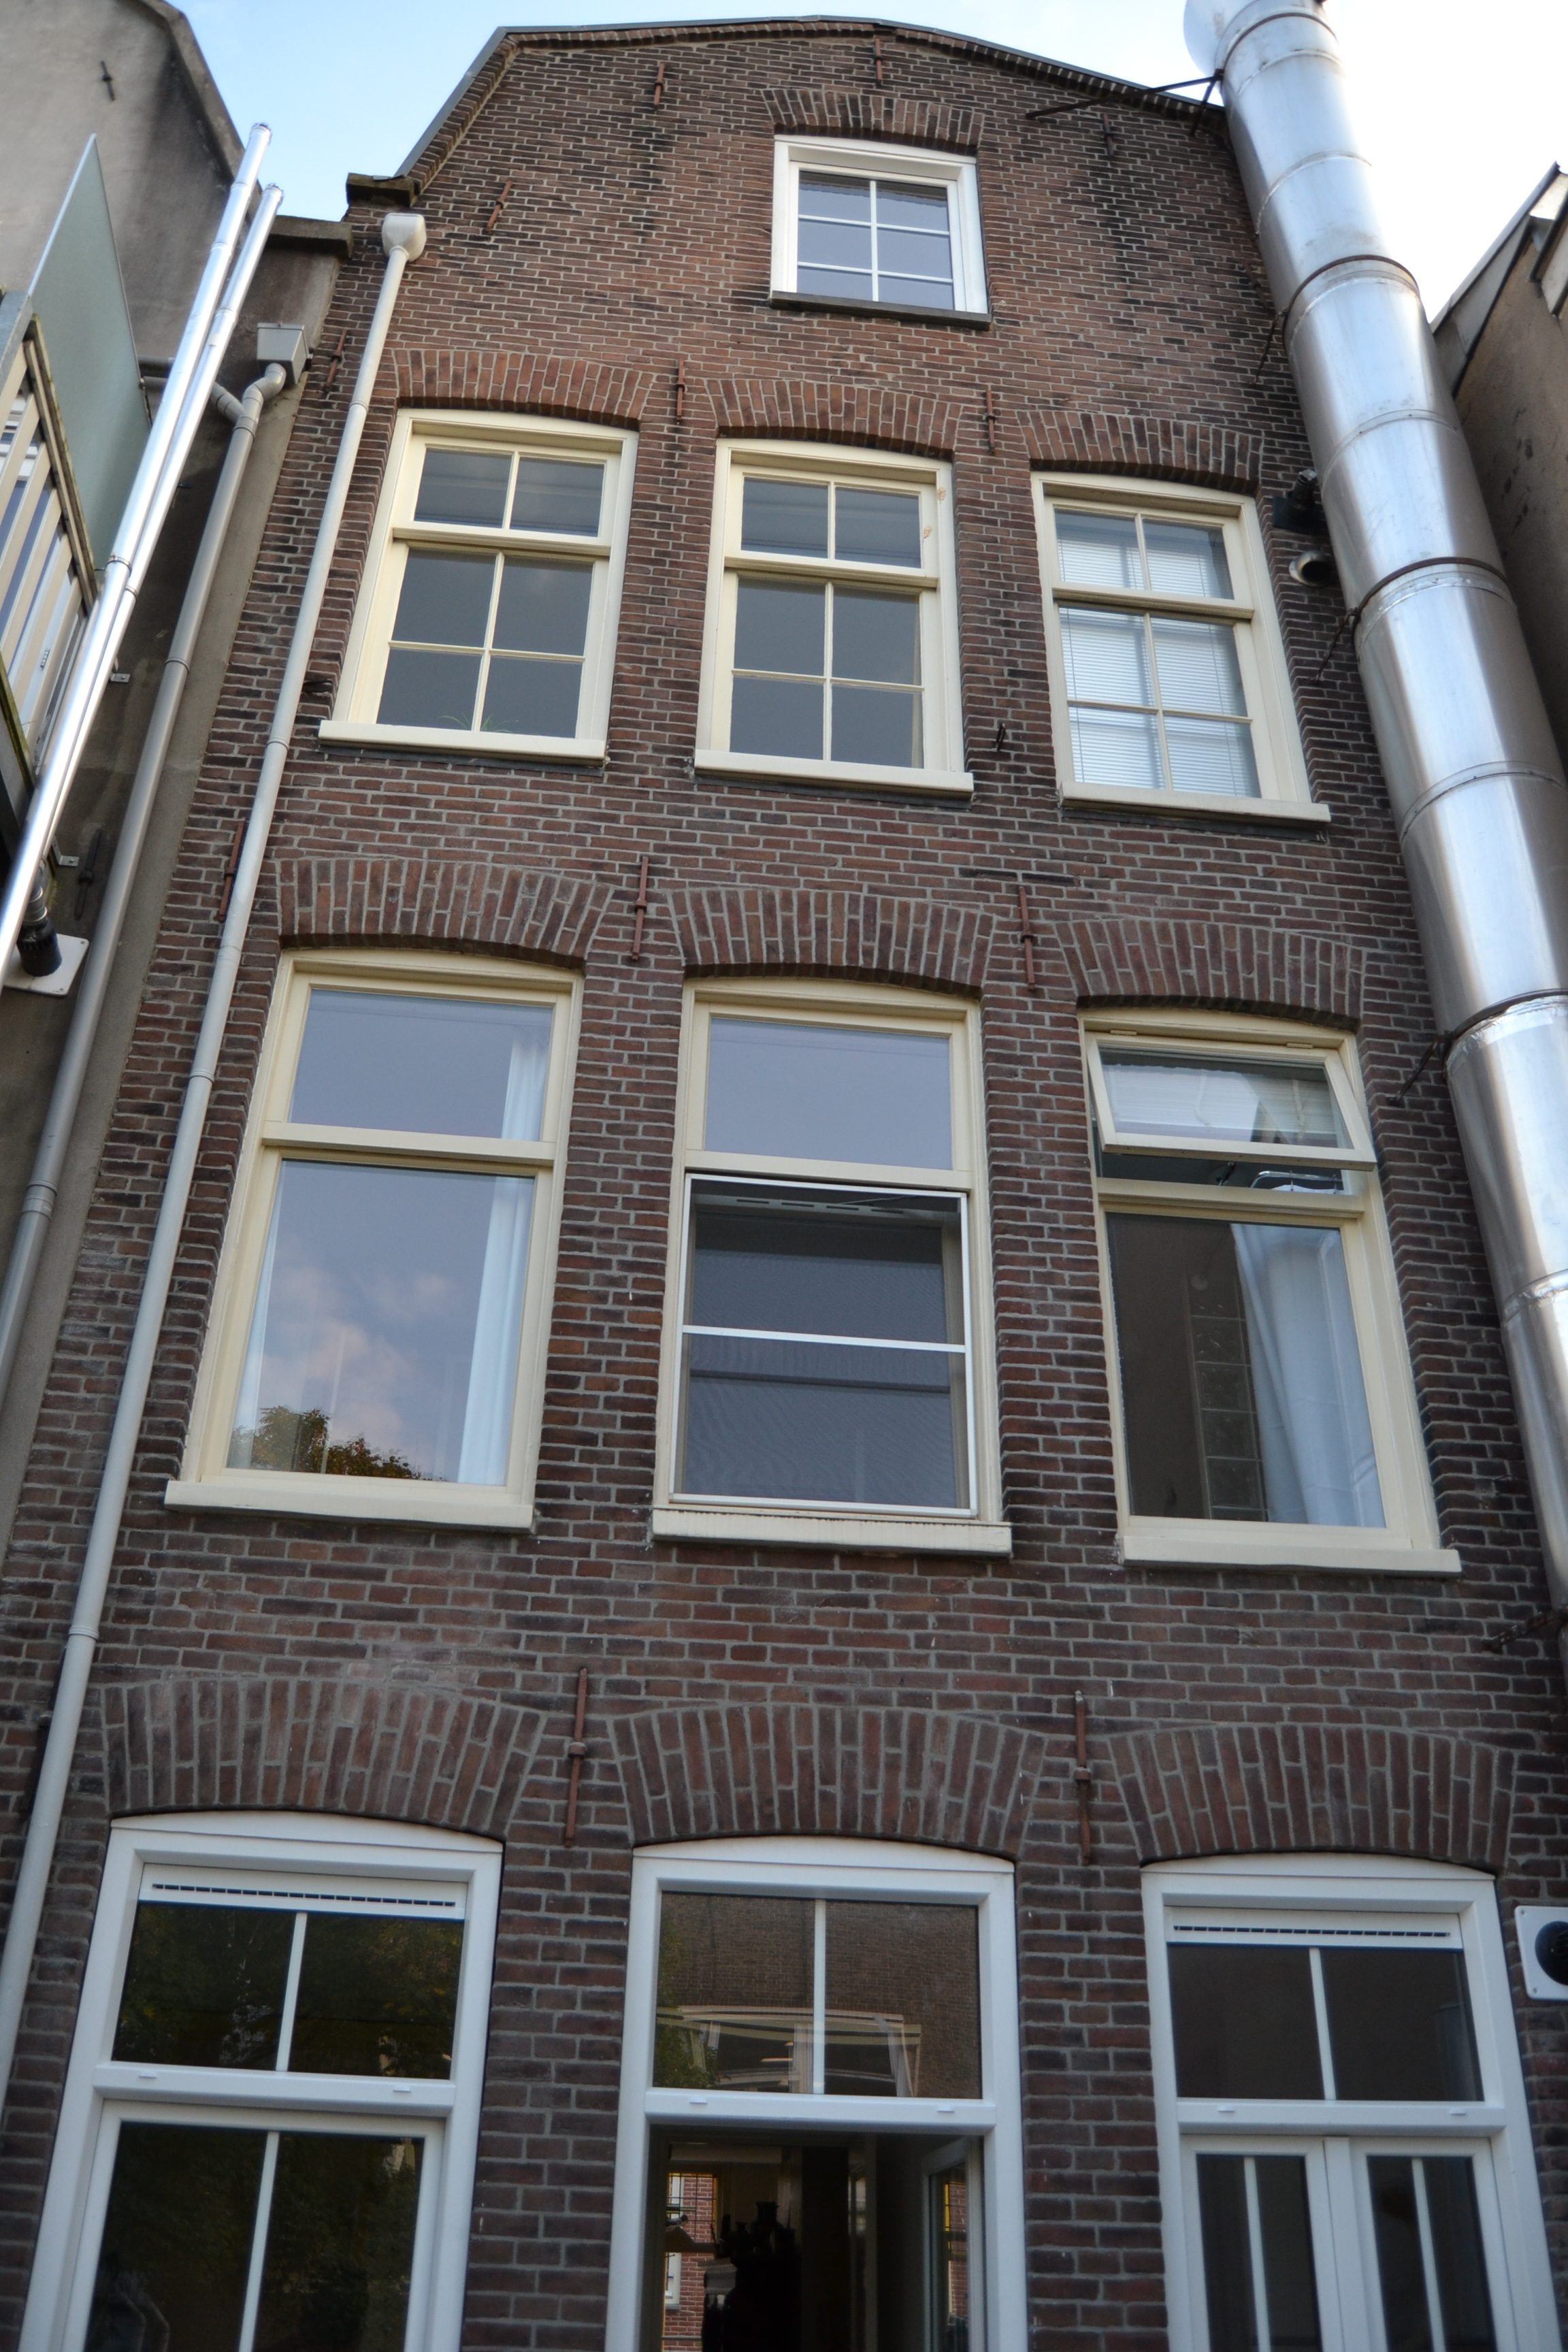 Dubbelglas Amsterdam - Scherpste qua prijs en plaatsing dubbel glas